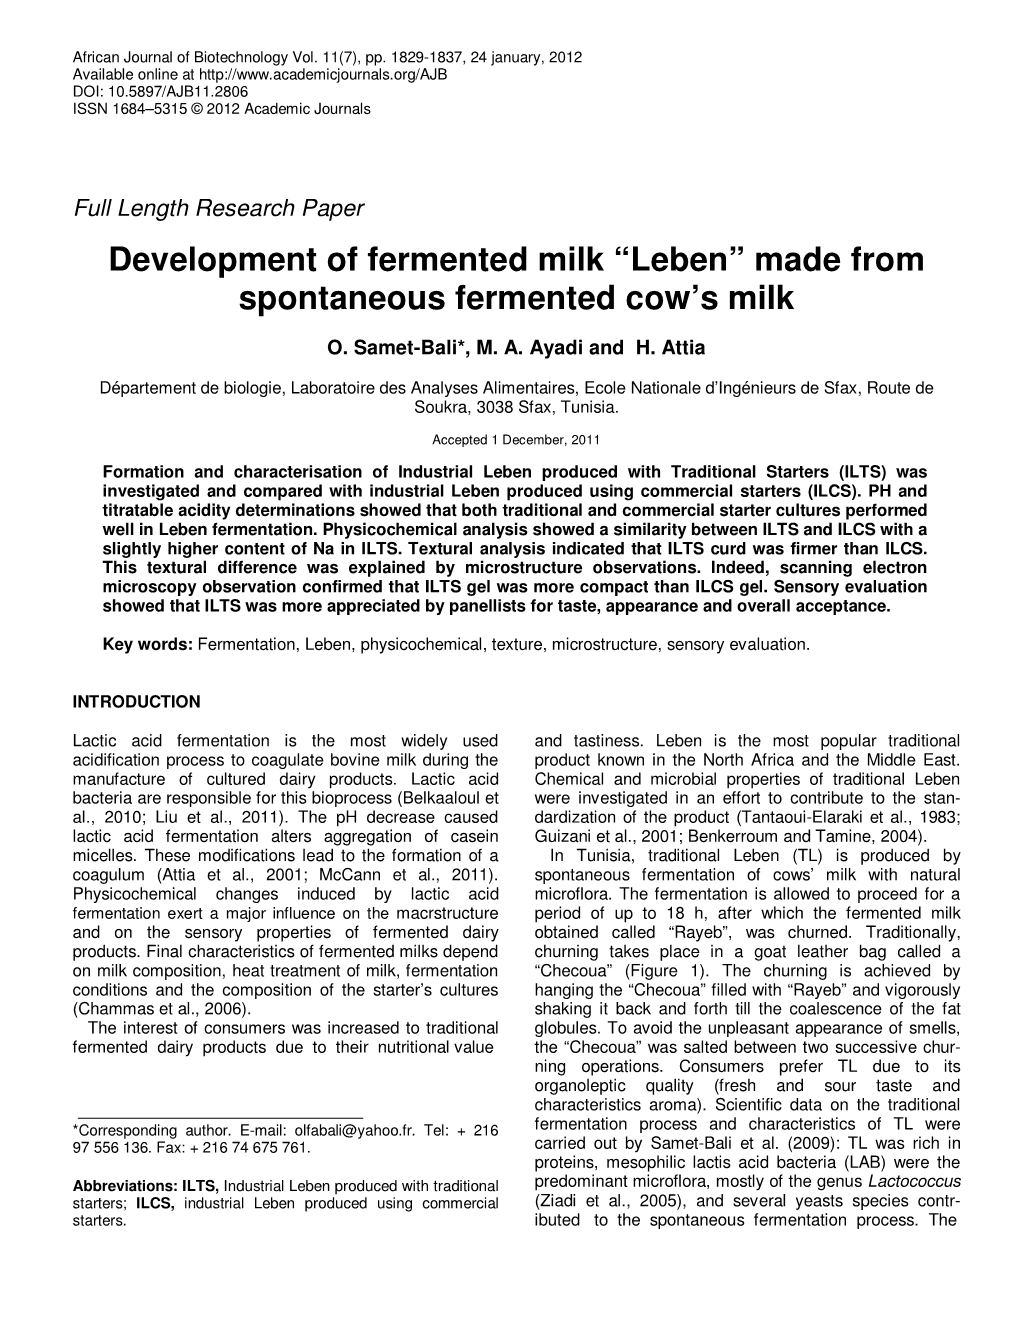 Development of Fermented Milk “Leben” Made from Spontaneous Fermented Cow’S Milk